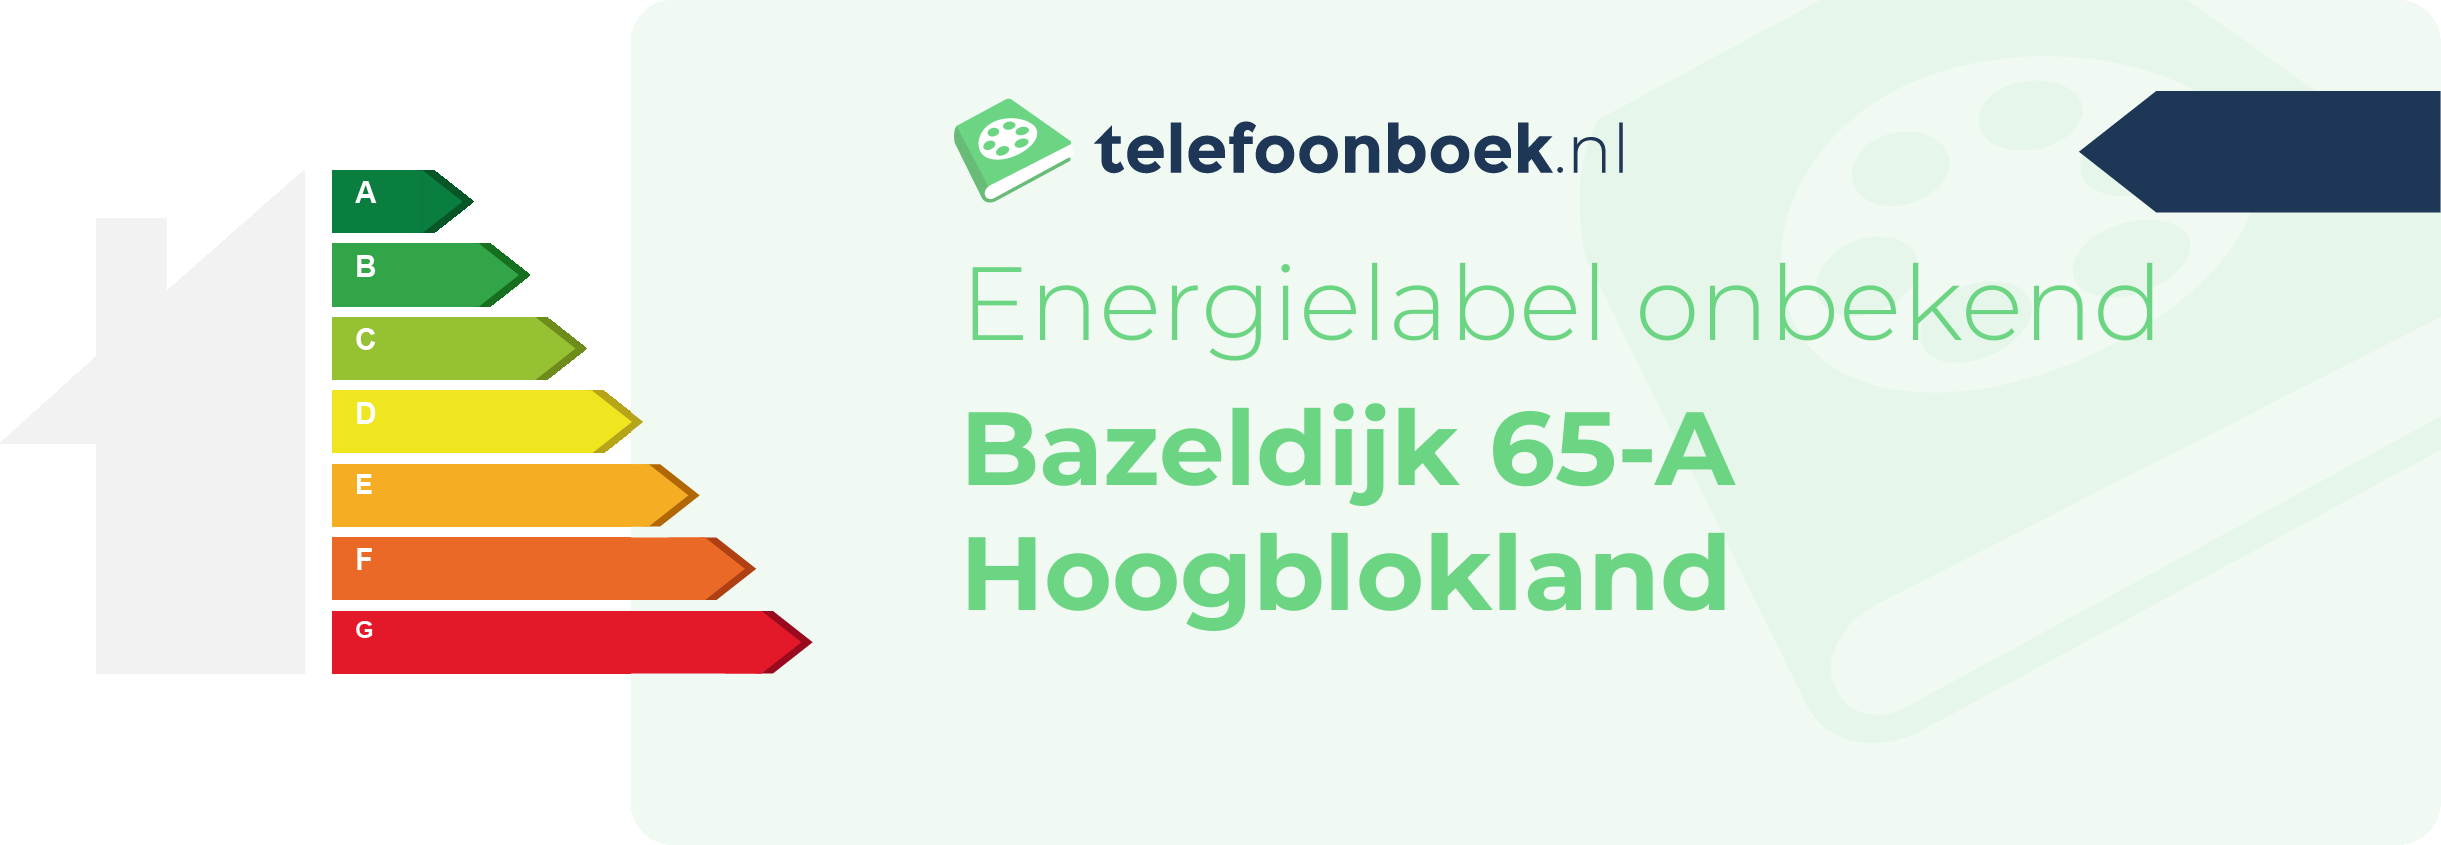 Energielabel Bazeldijk 65-A Hoogblokland